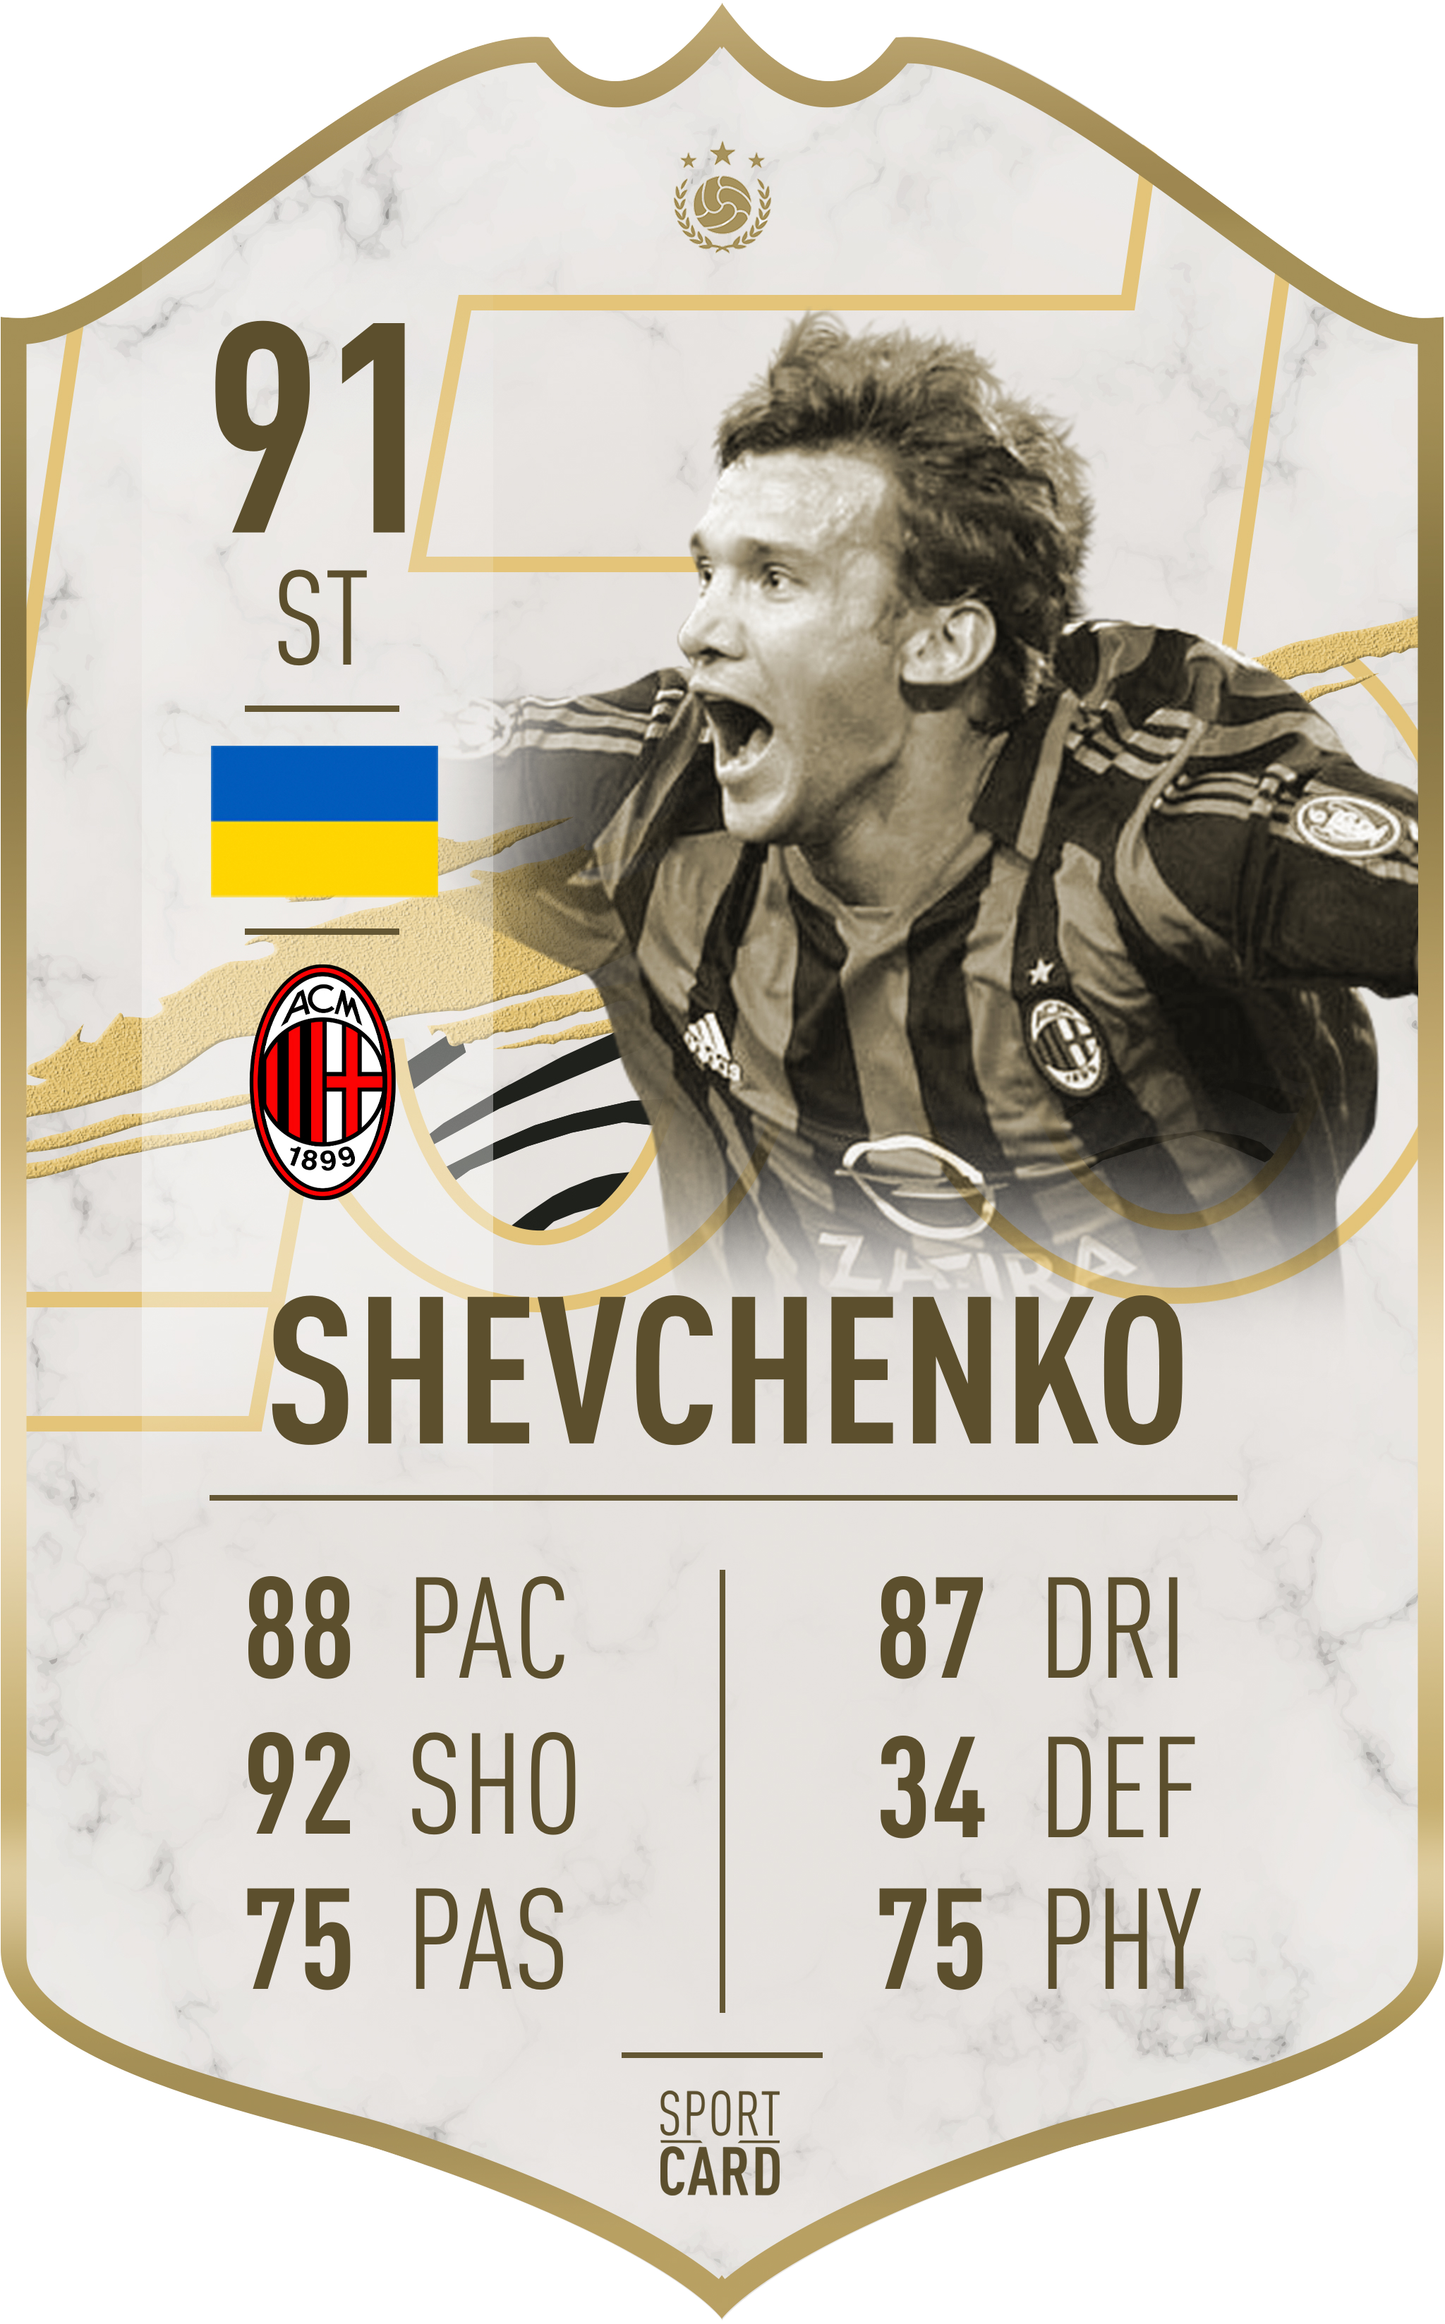 SHEVCHENKO CARD